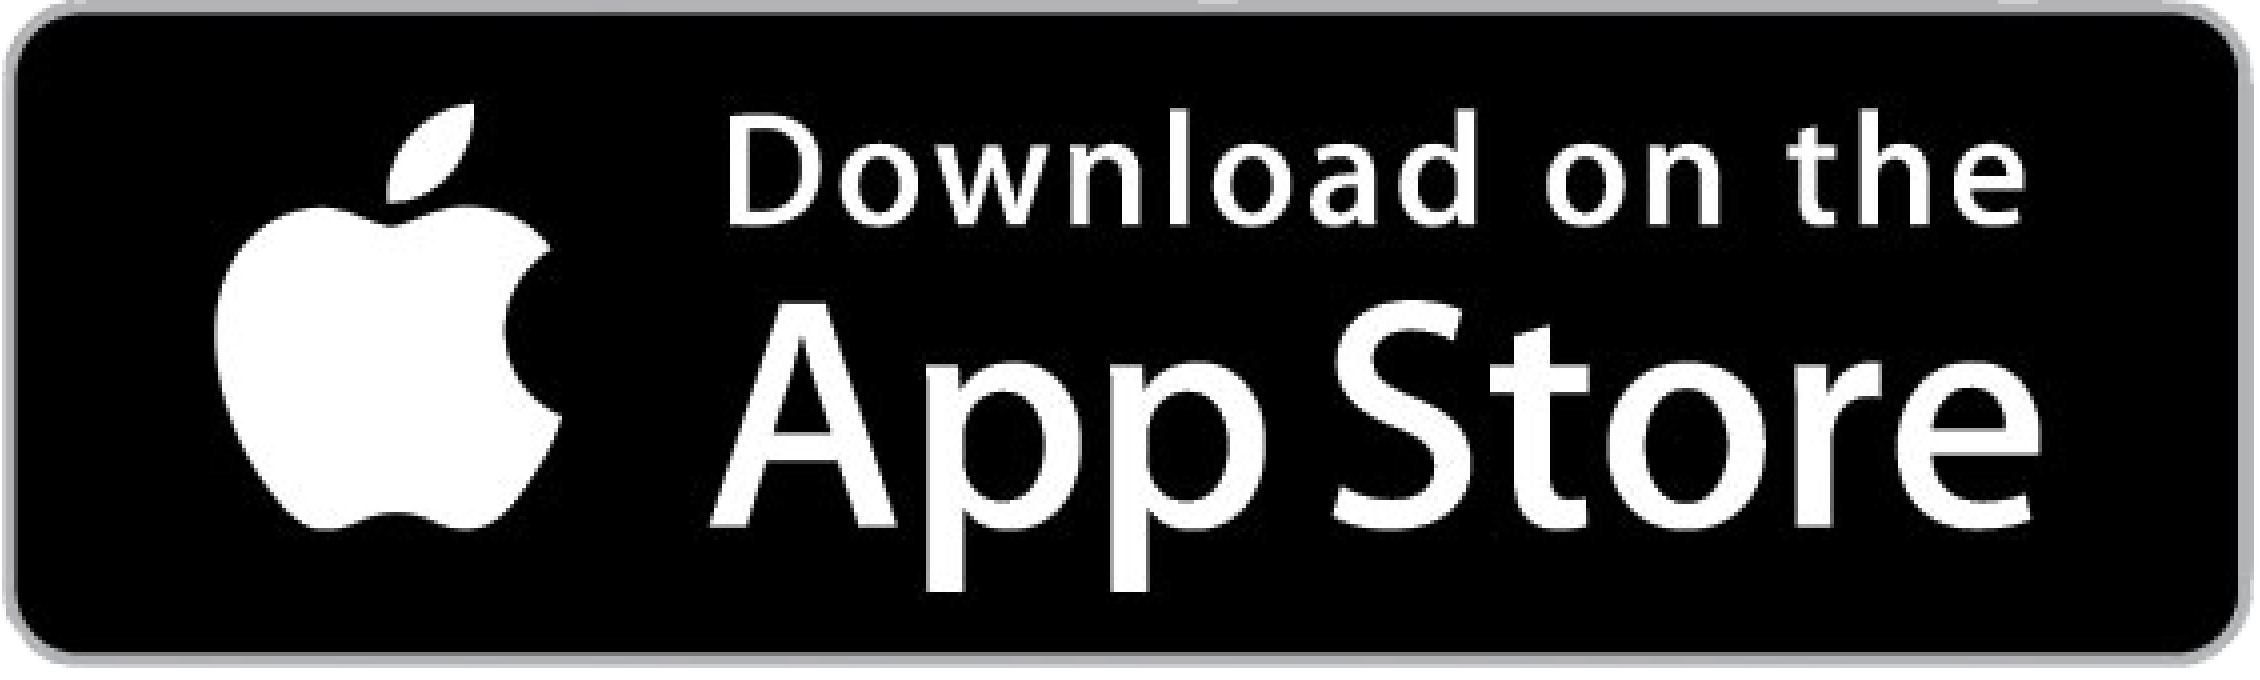 Shopkick | Download on App Store